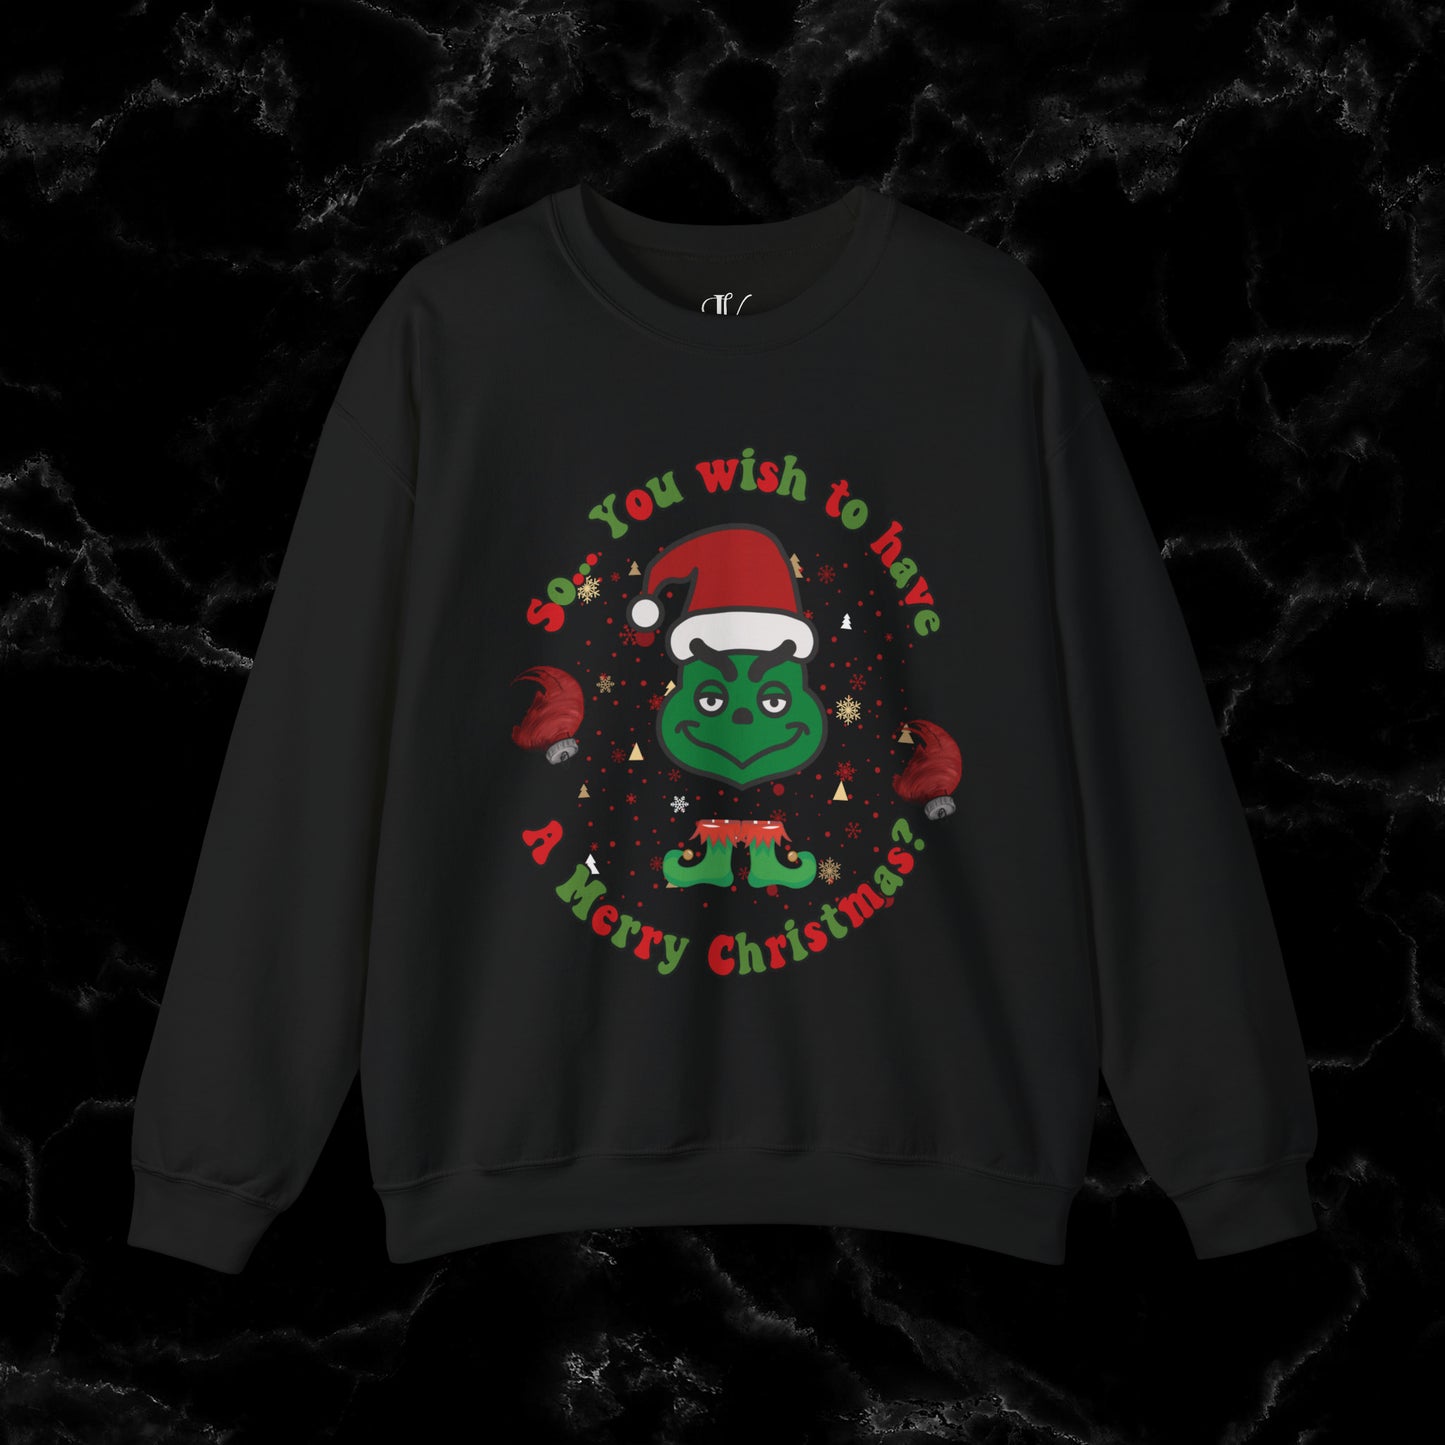 So You Wish To Have Merry Christmas Grinch Sweatshirt - Funny Grinchmas Gift Sweatshirt S Black 